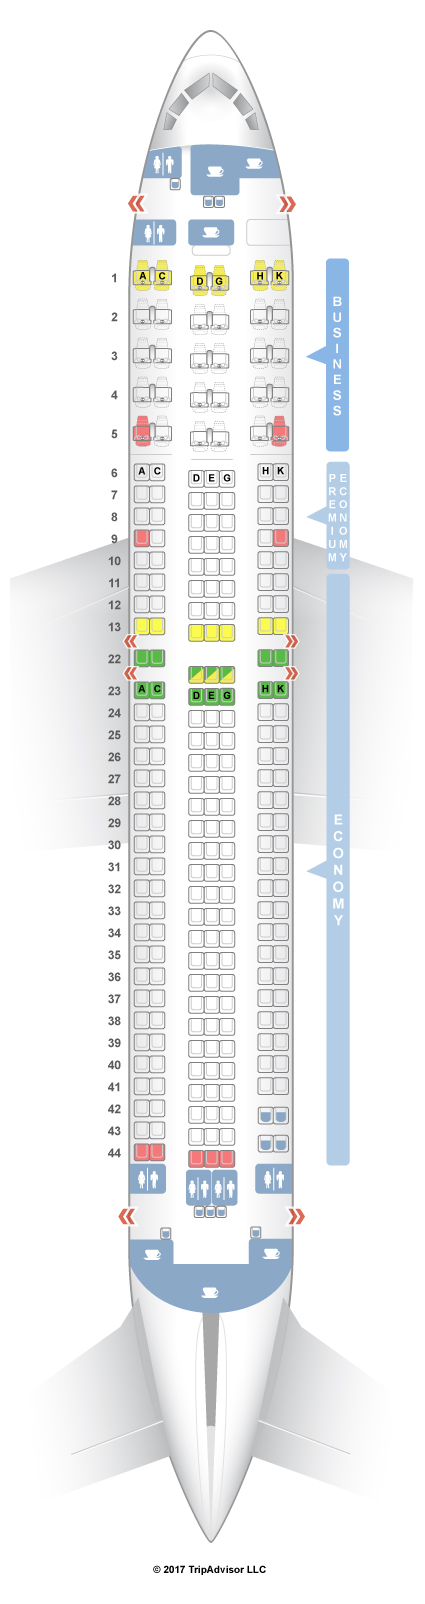 Boeing 767 Passenger Jet Seating Chart